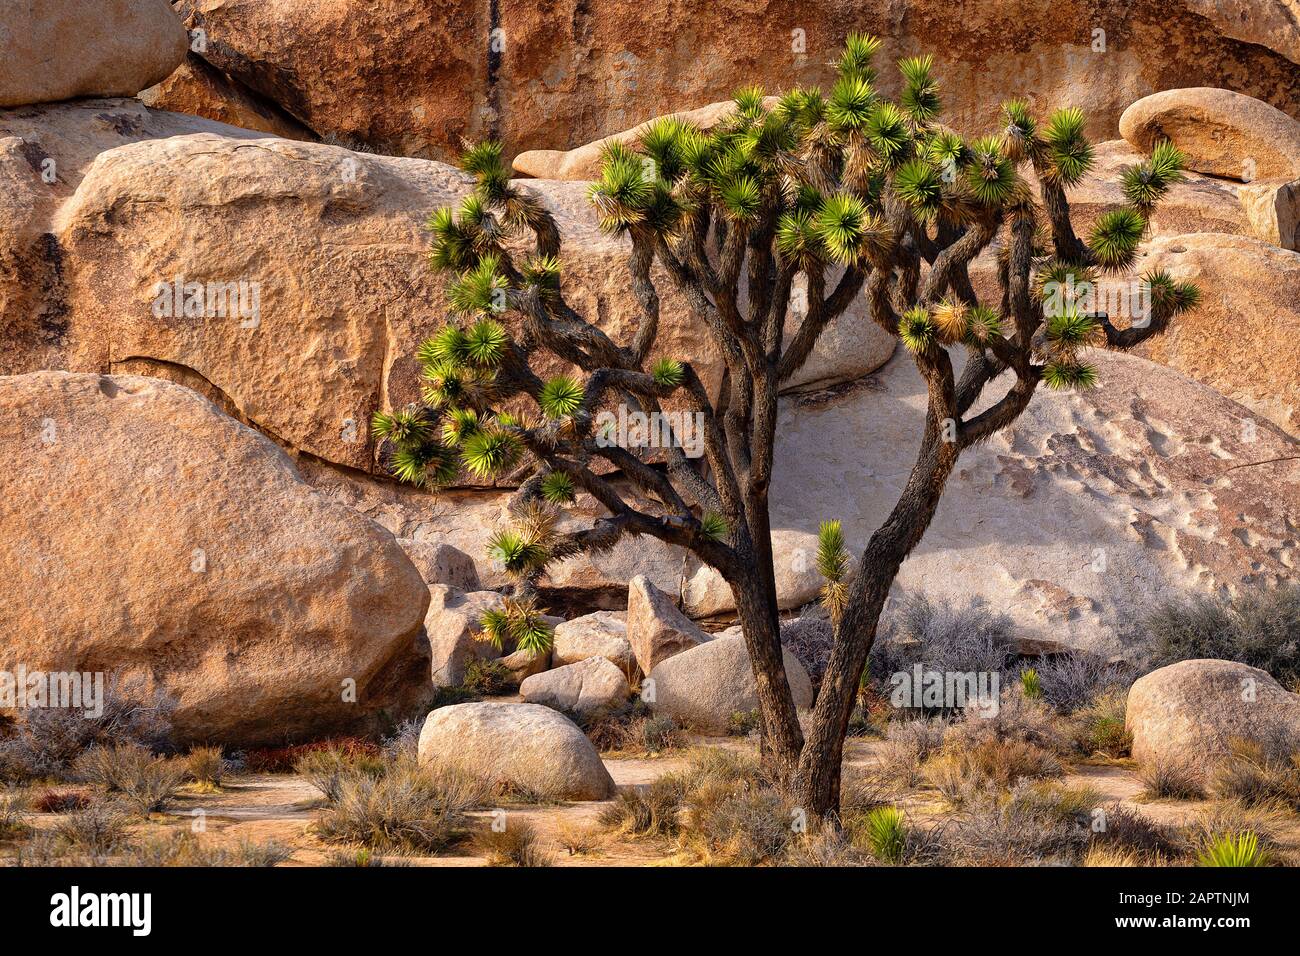 Joshua Tree National Park California USA. Joshua tree, Yucca palm, or Tree yucca (Yucca brevifolia). Stock Photo